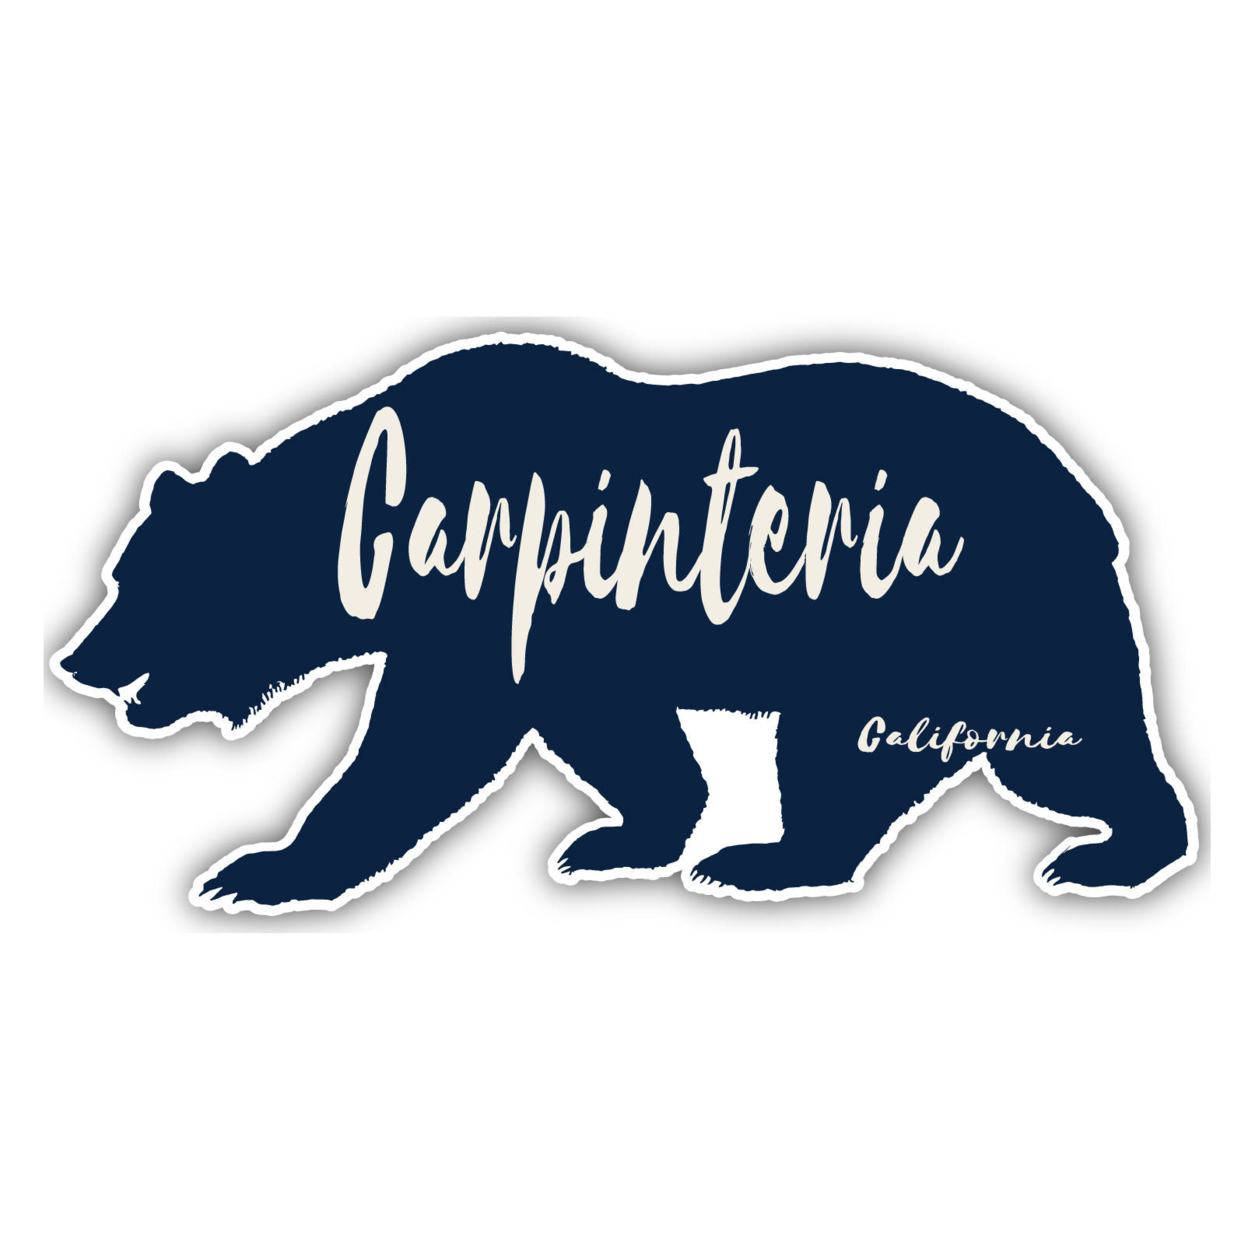 Carpinteria California Souvenir Decorative Stickers (Choose Theme And Size) - Single Unit, 10-Inch, Camp Life